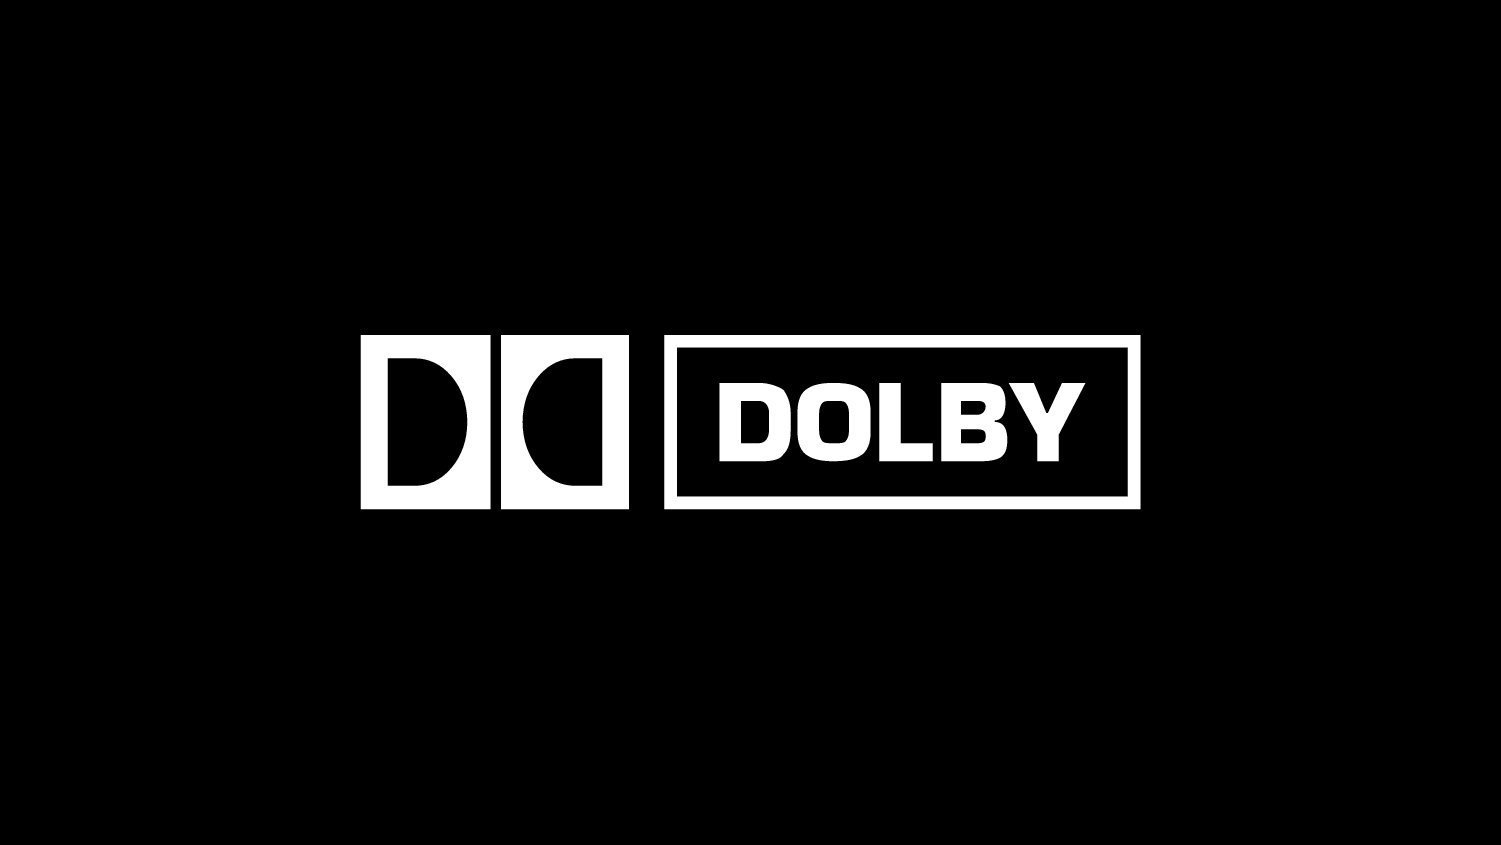 Просто долбит. Dolby логотип. Логотип долби диджитал. Значок Dolby Digital. Dolby заставка.